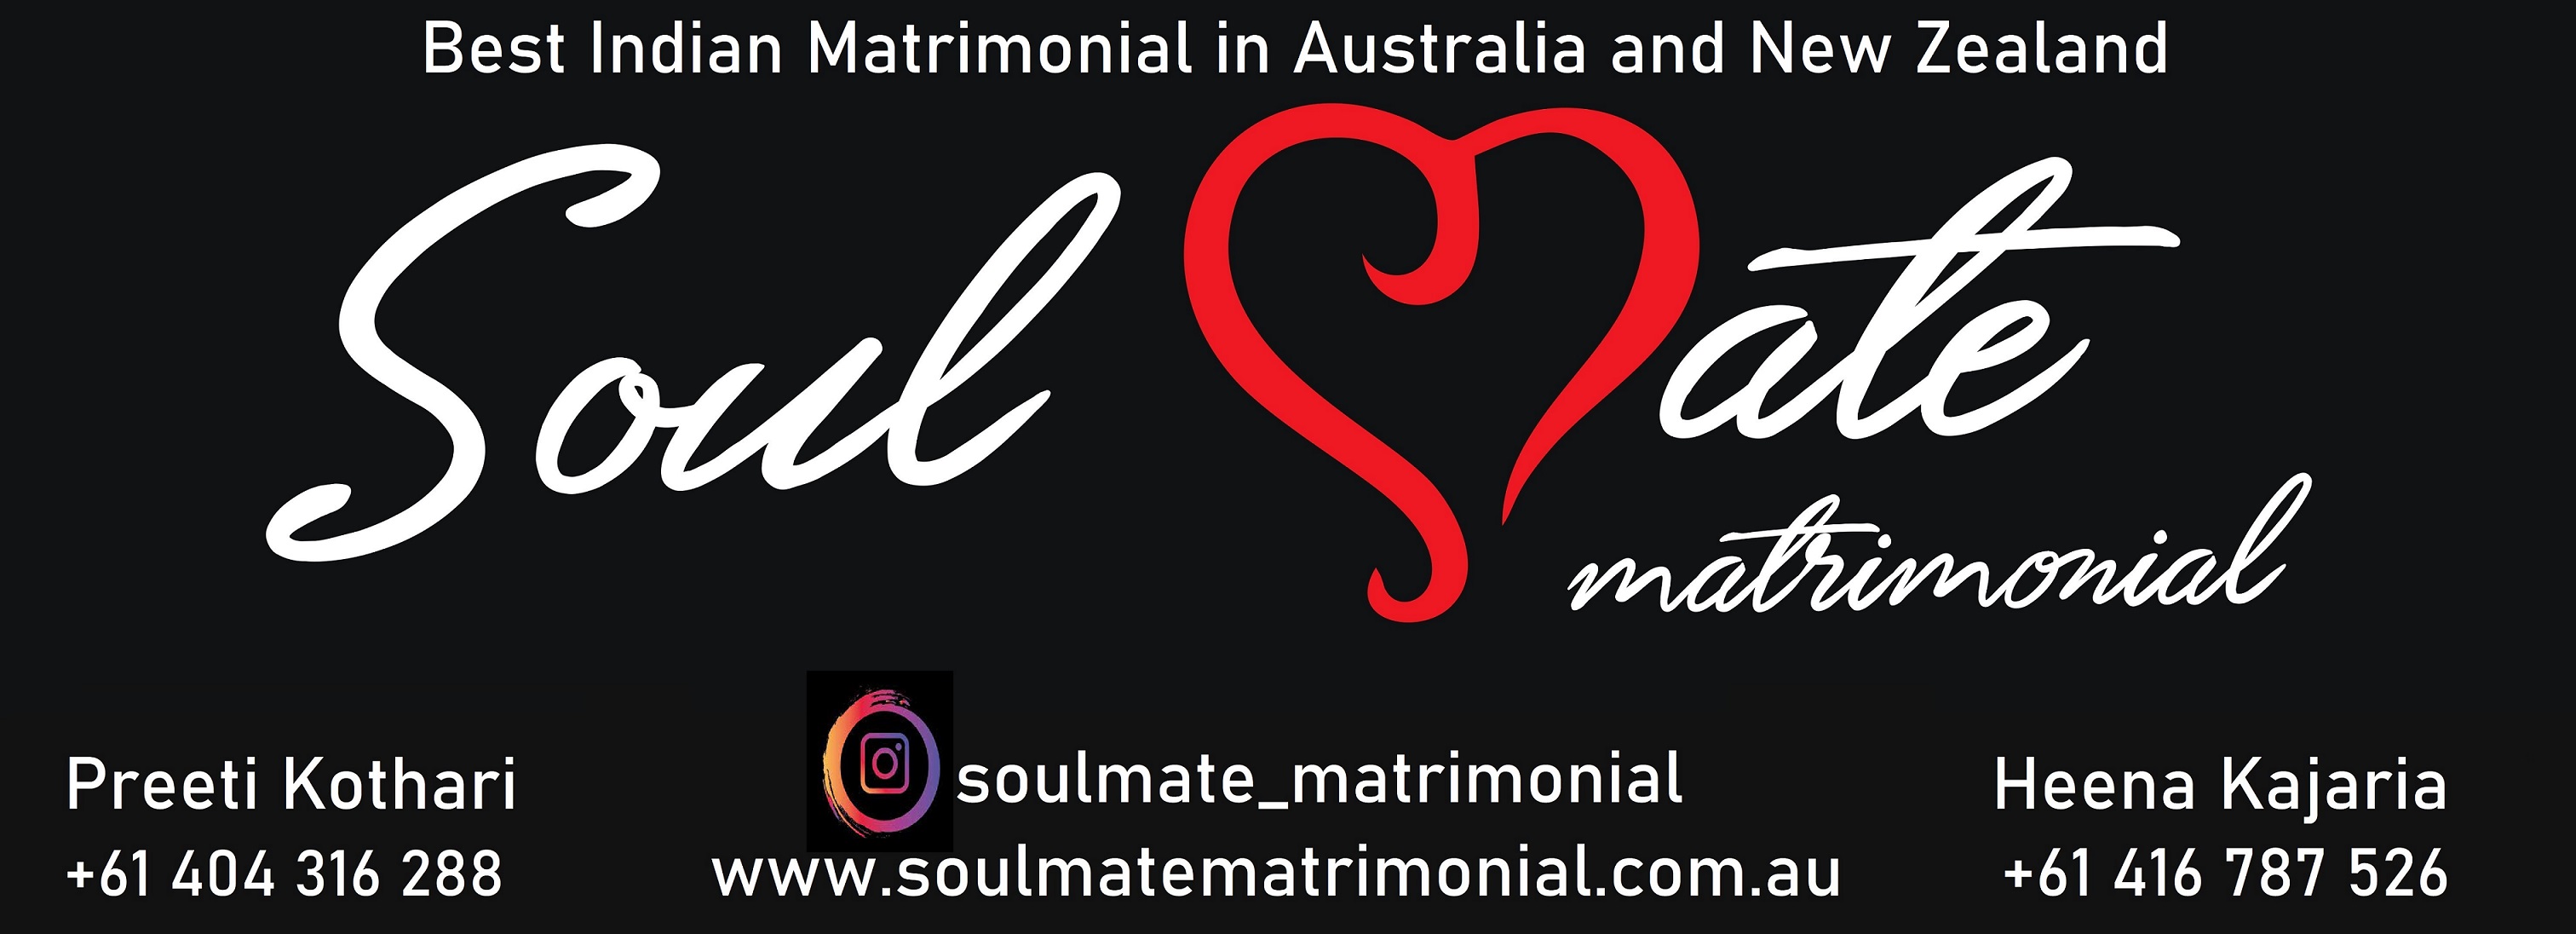 Soulmate Matrimonial services